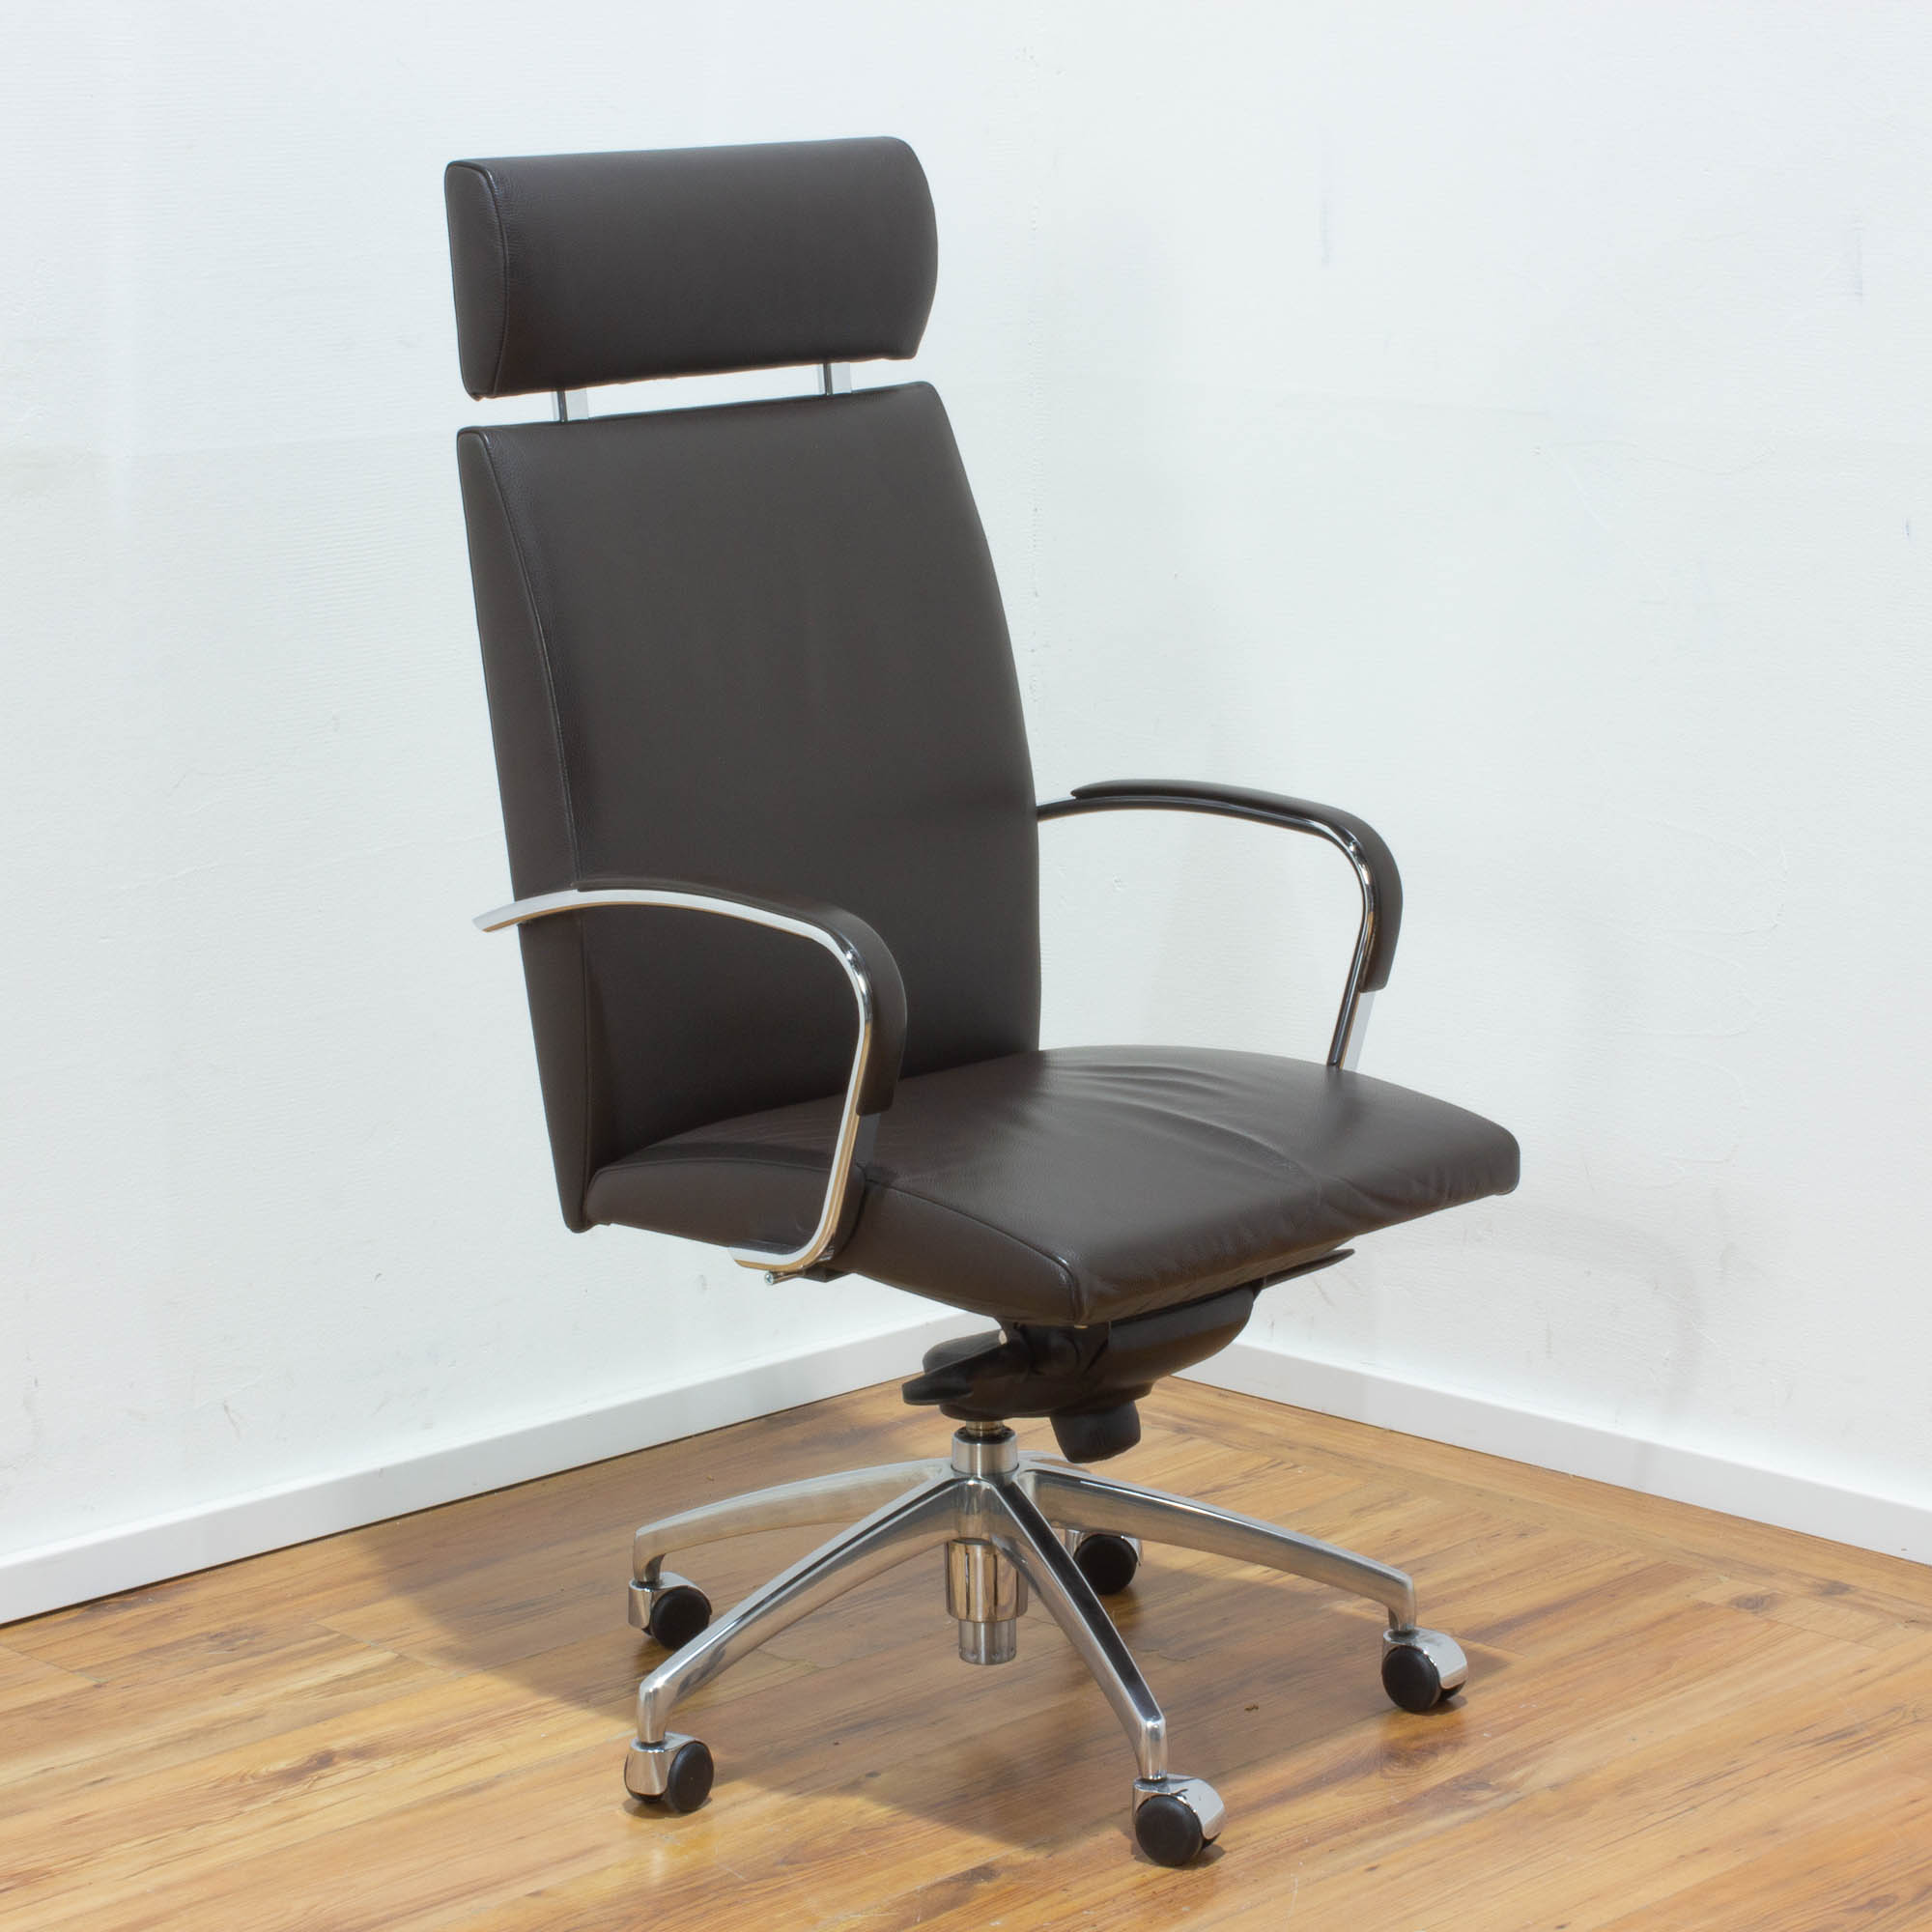 Spiegels "Tano" Office Chair - Leder braun - Gestell chrom